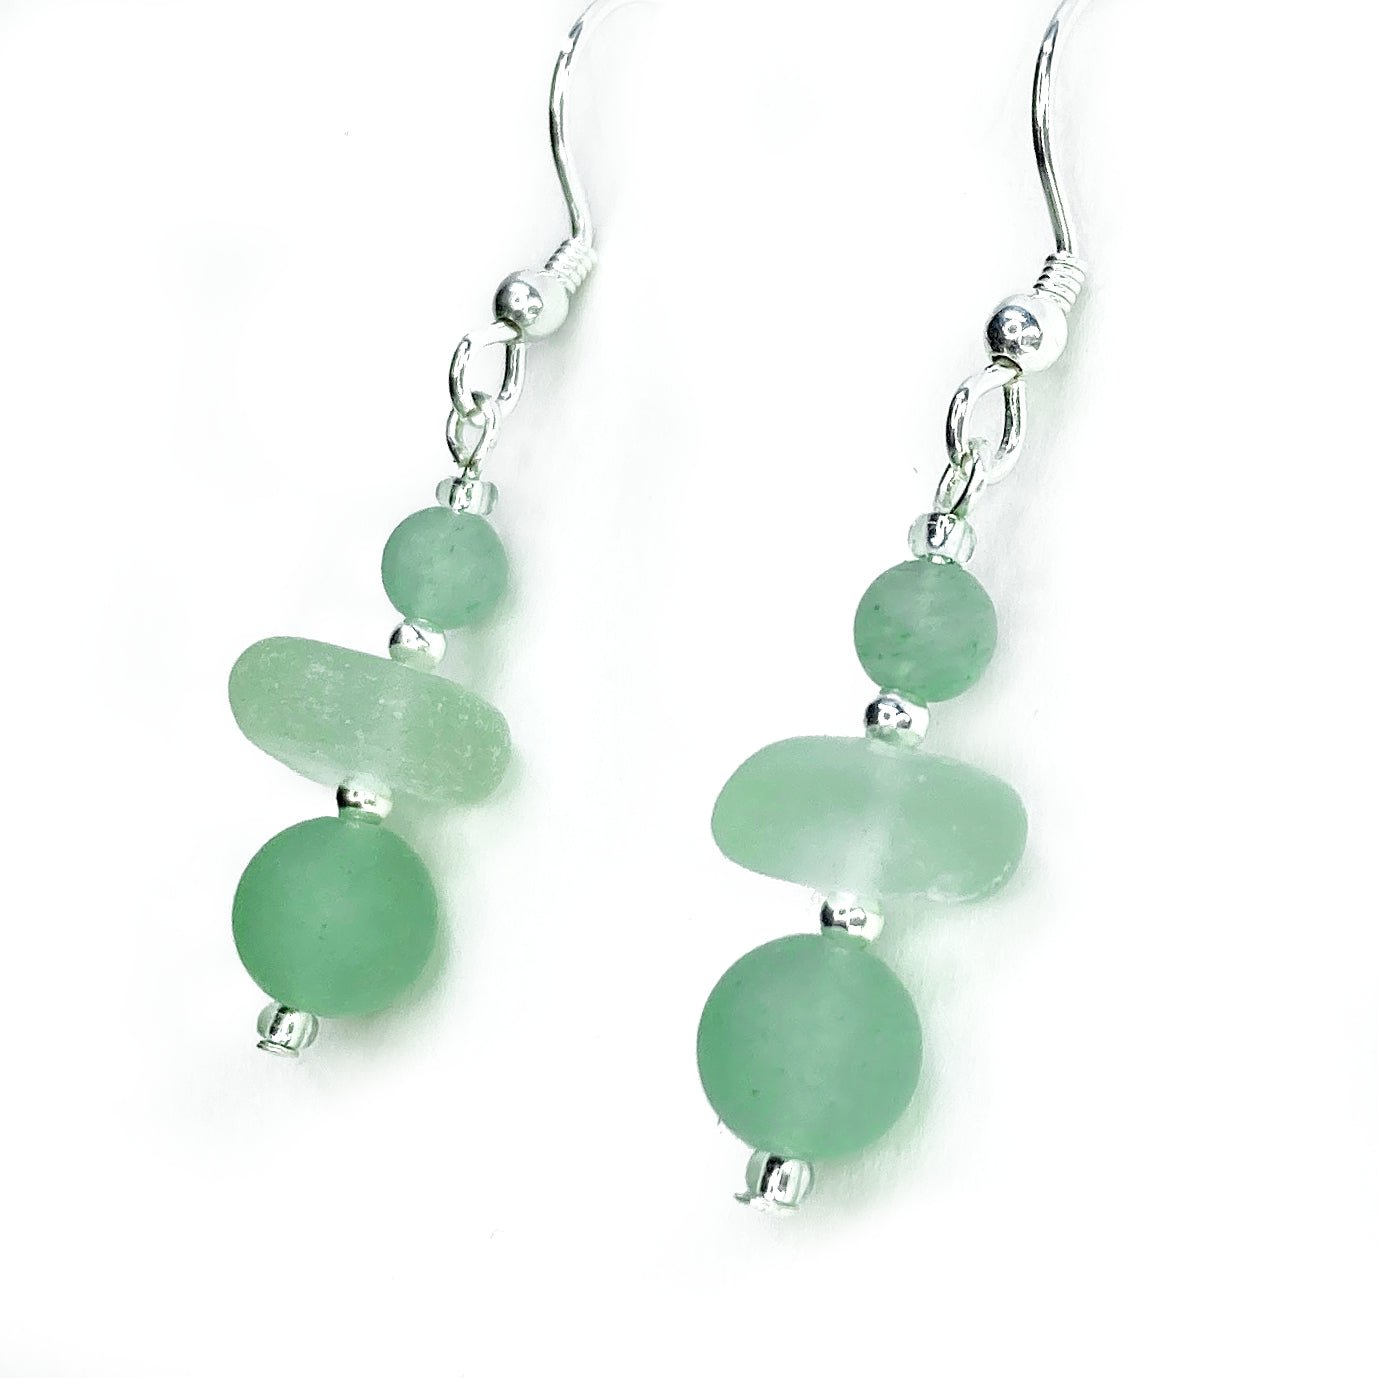 Green Sea Glass Earrings - Sterling Silver Beaded Earrings with Aventurine Crystal - East Neuk Beach Crafts